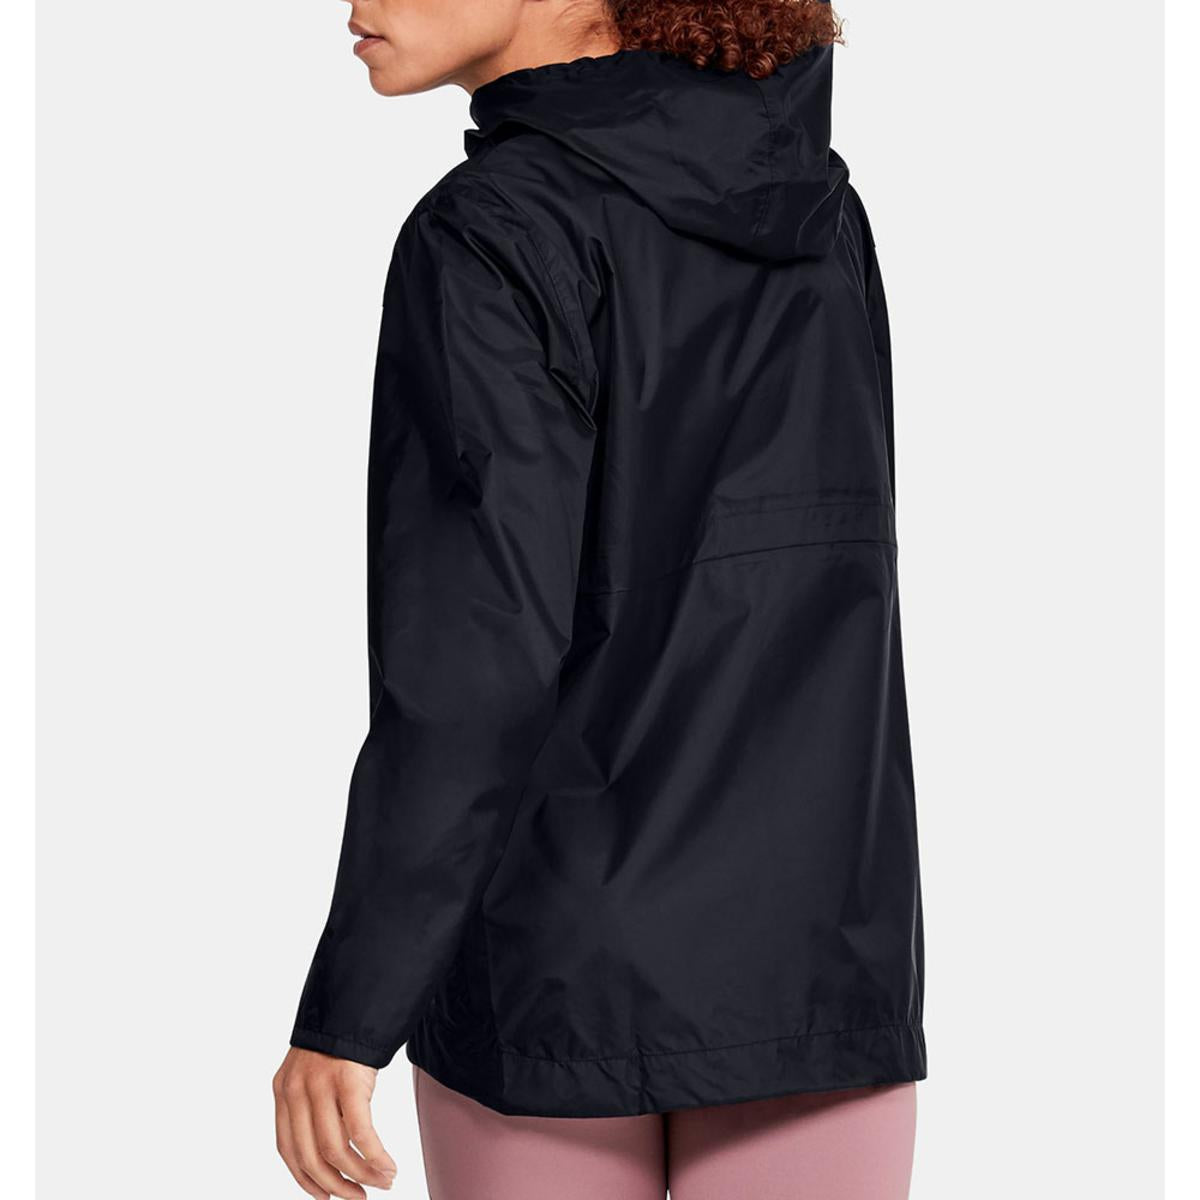 Under Armour Women's Cloudstrike Shell Jacket - Tall